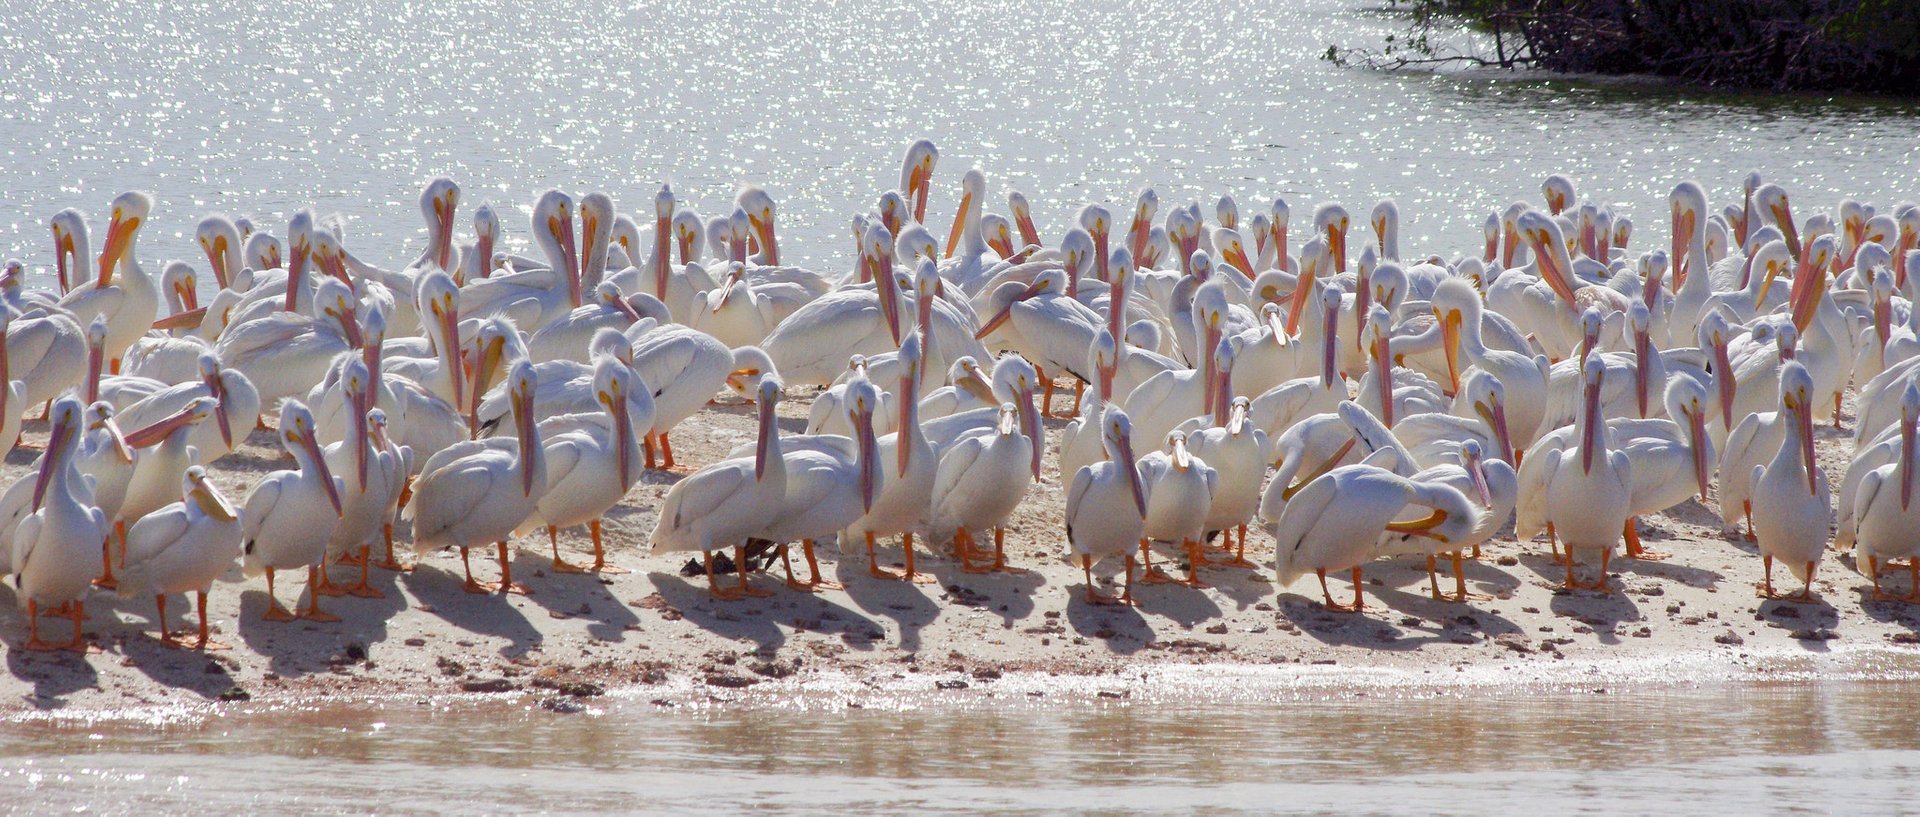 Pelicani bianchi